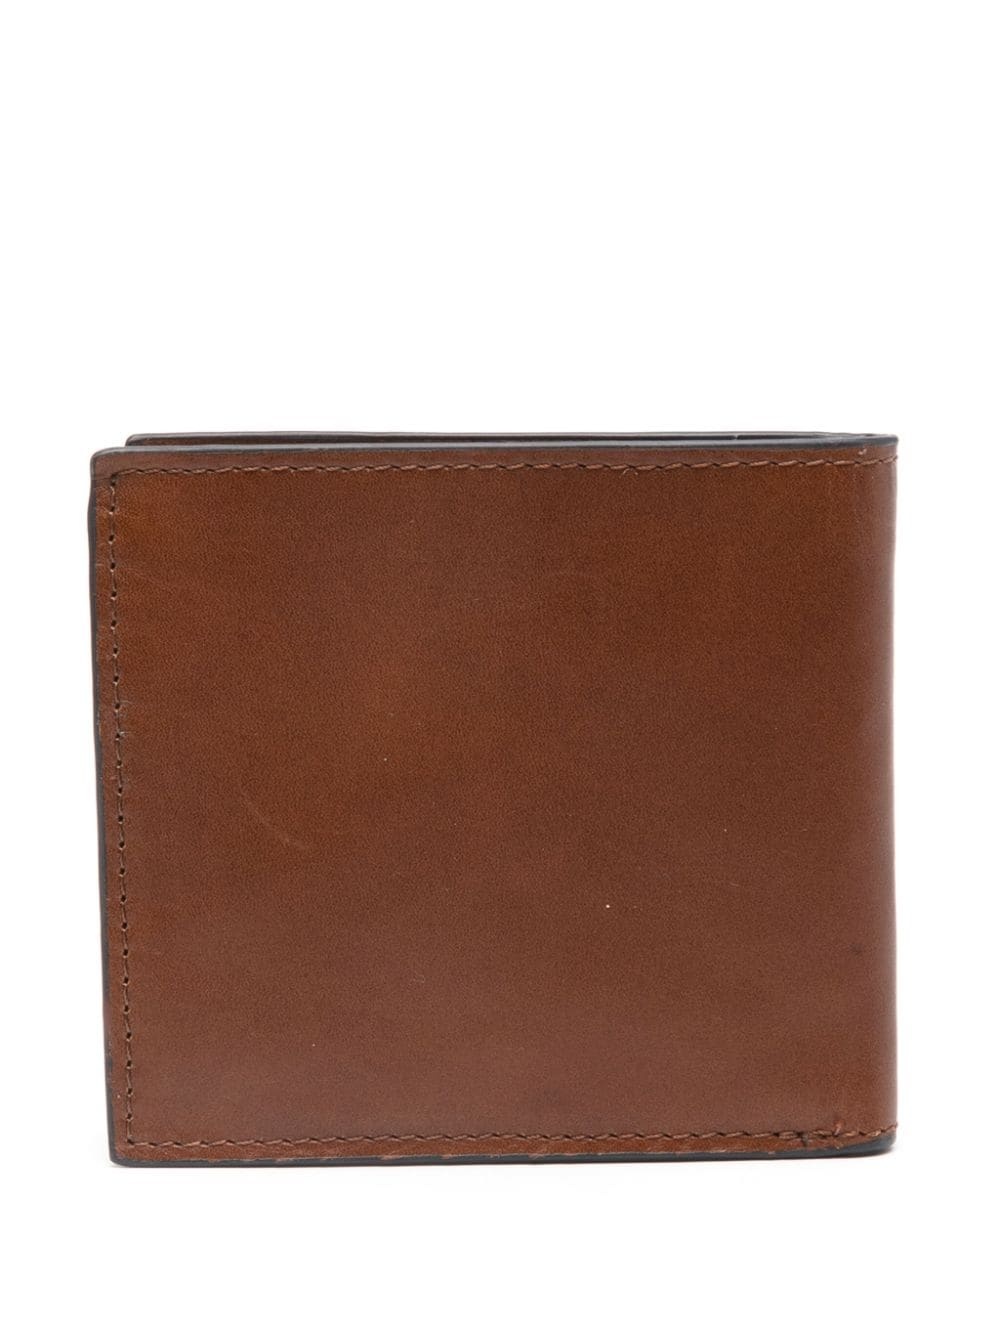 Torridon leather wallet - 2